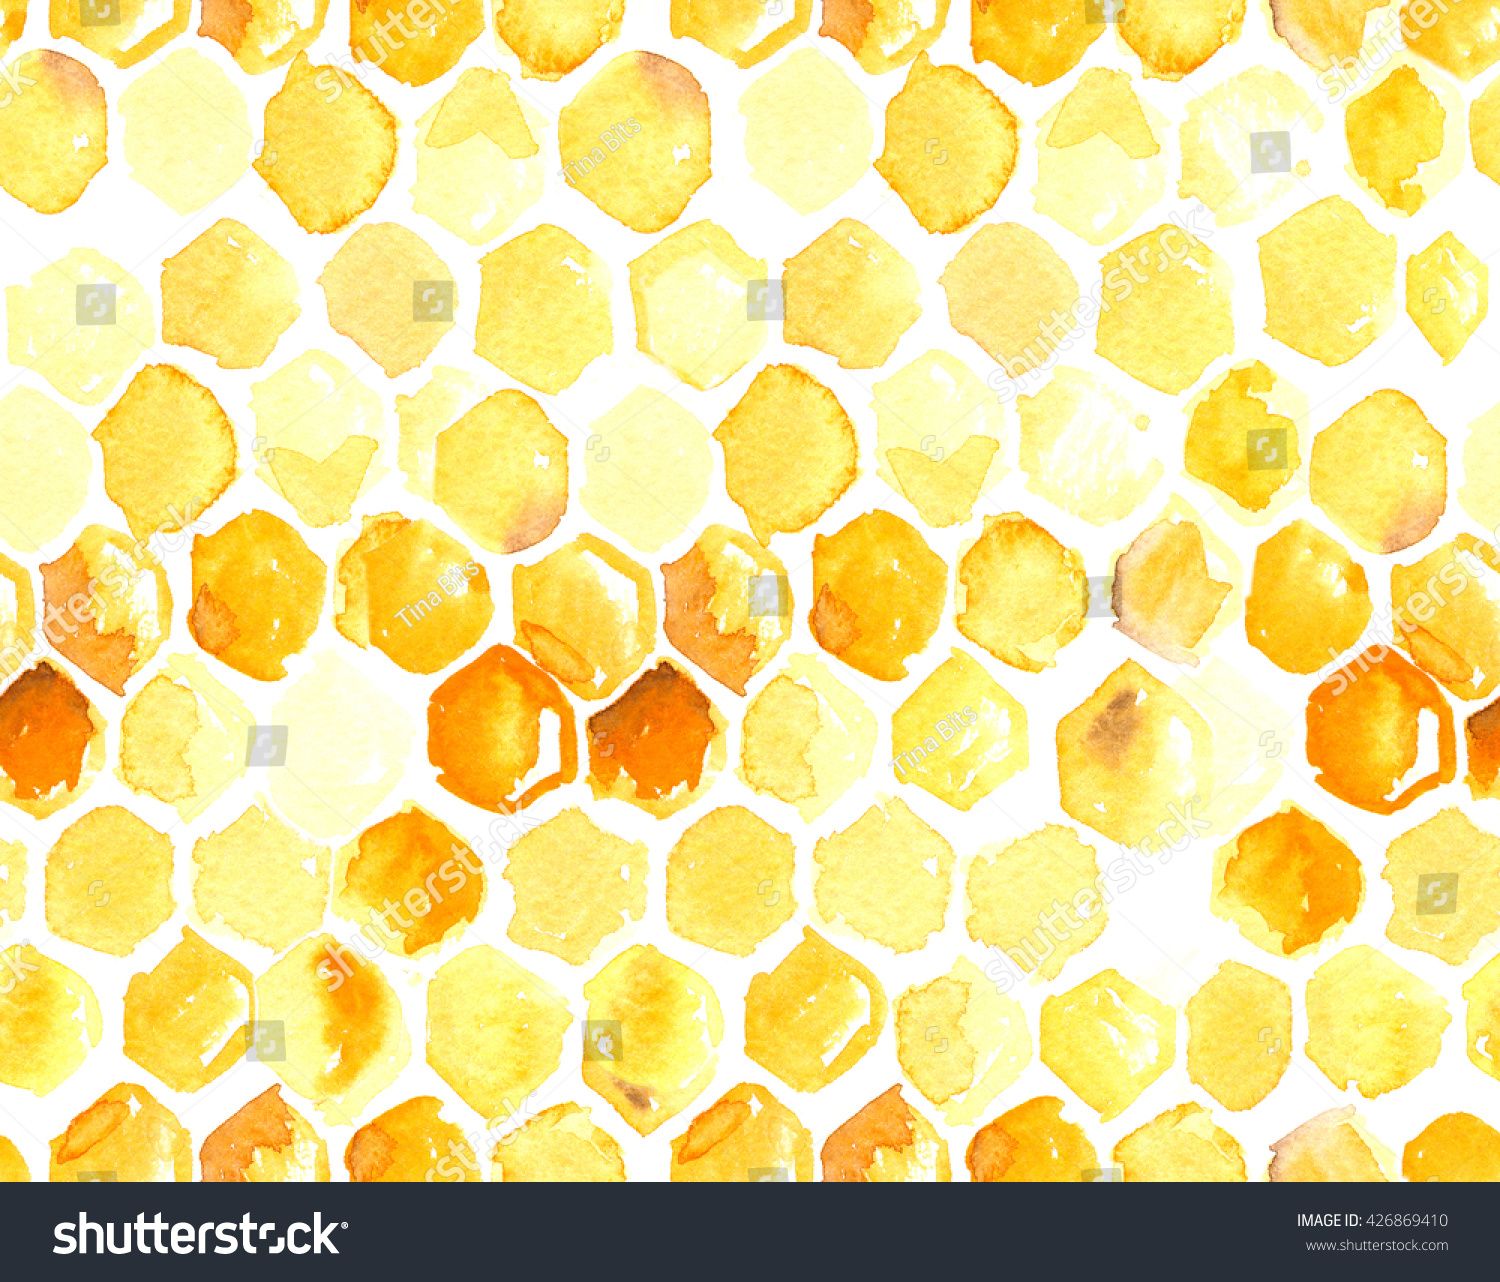 honeycomb clipart watercolor